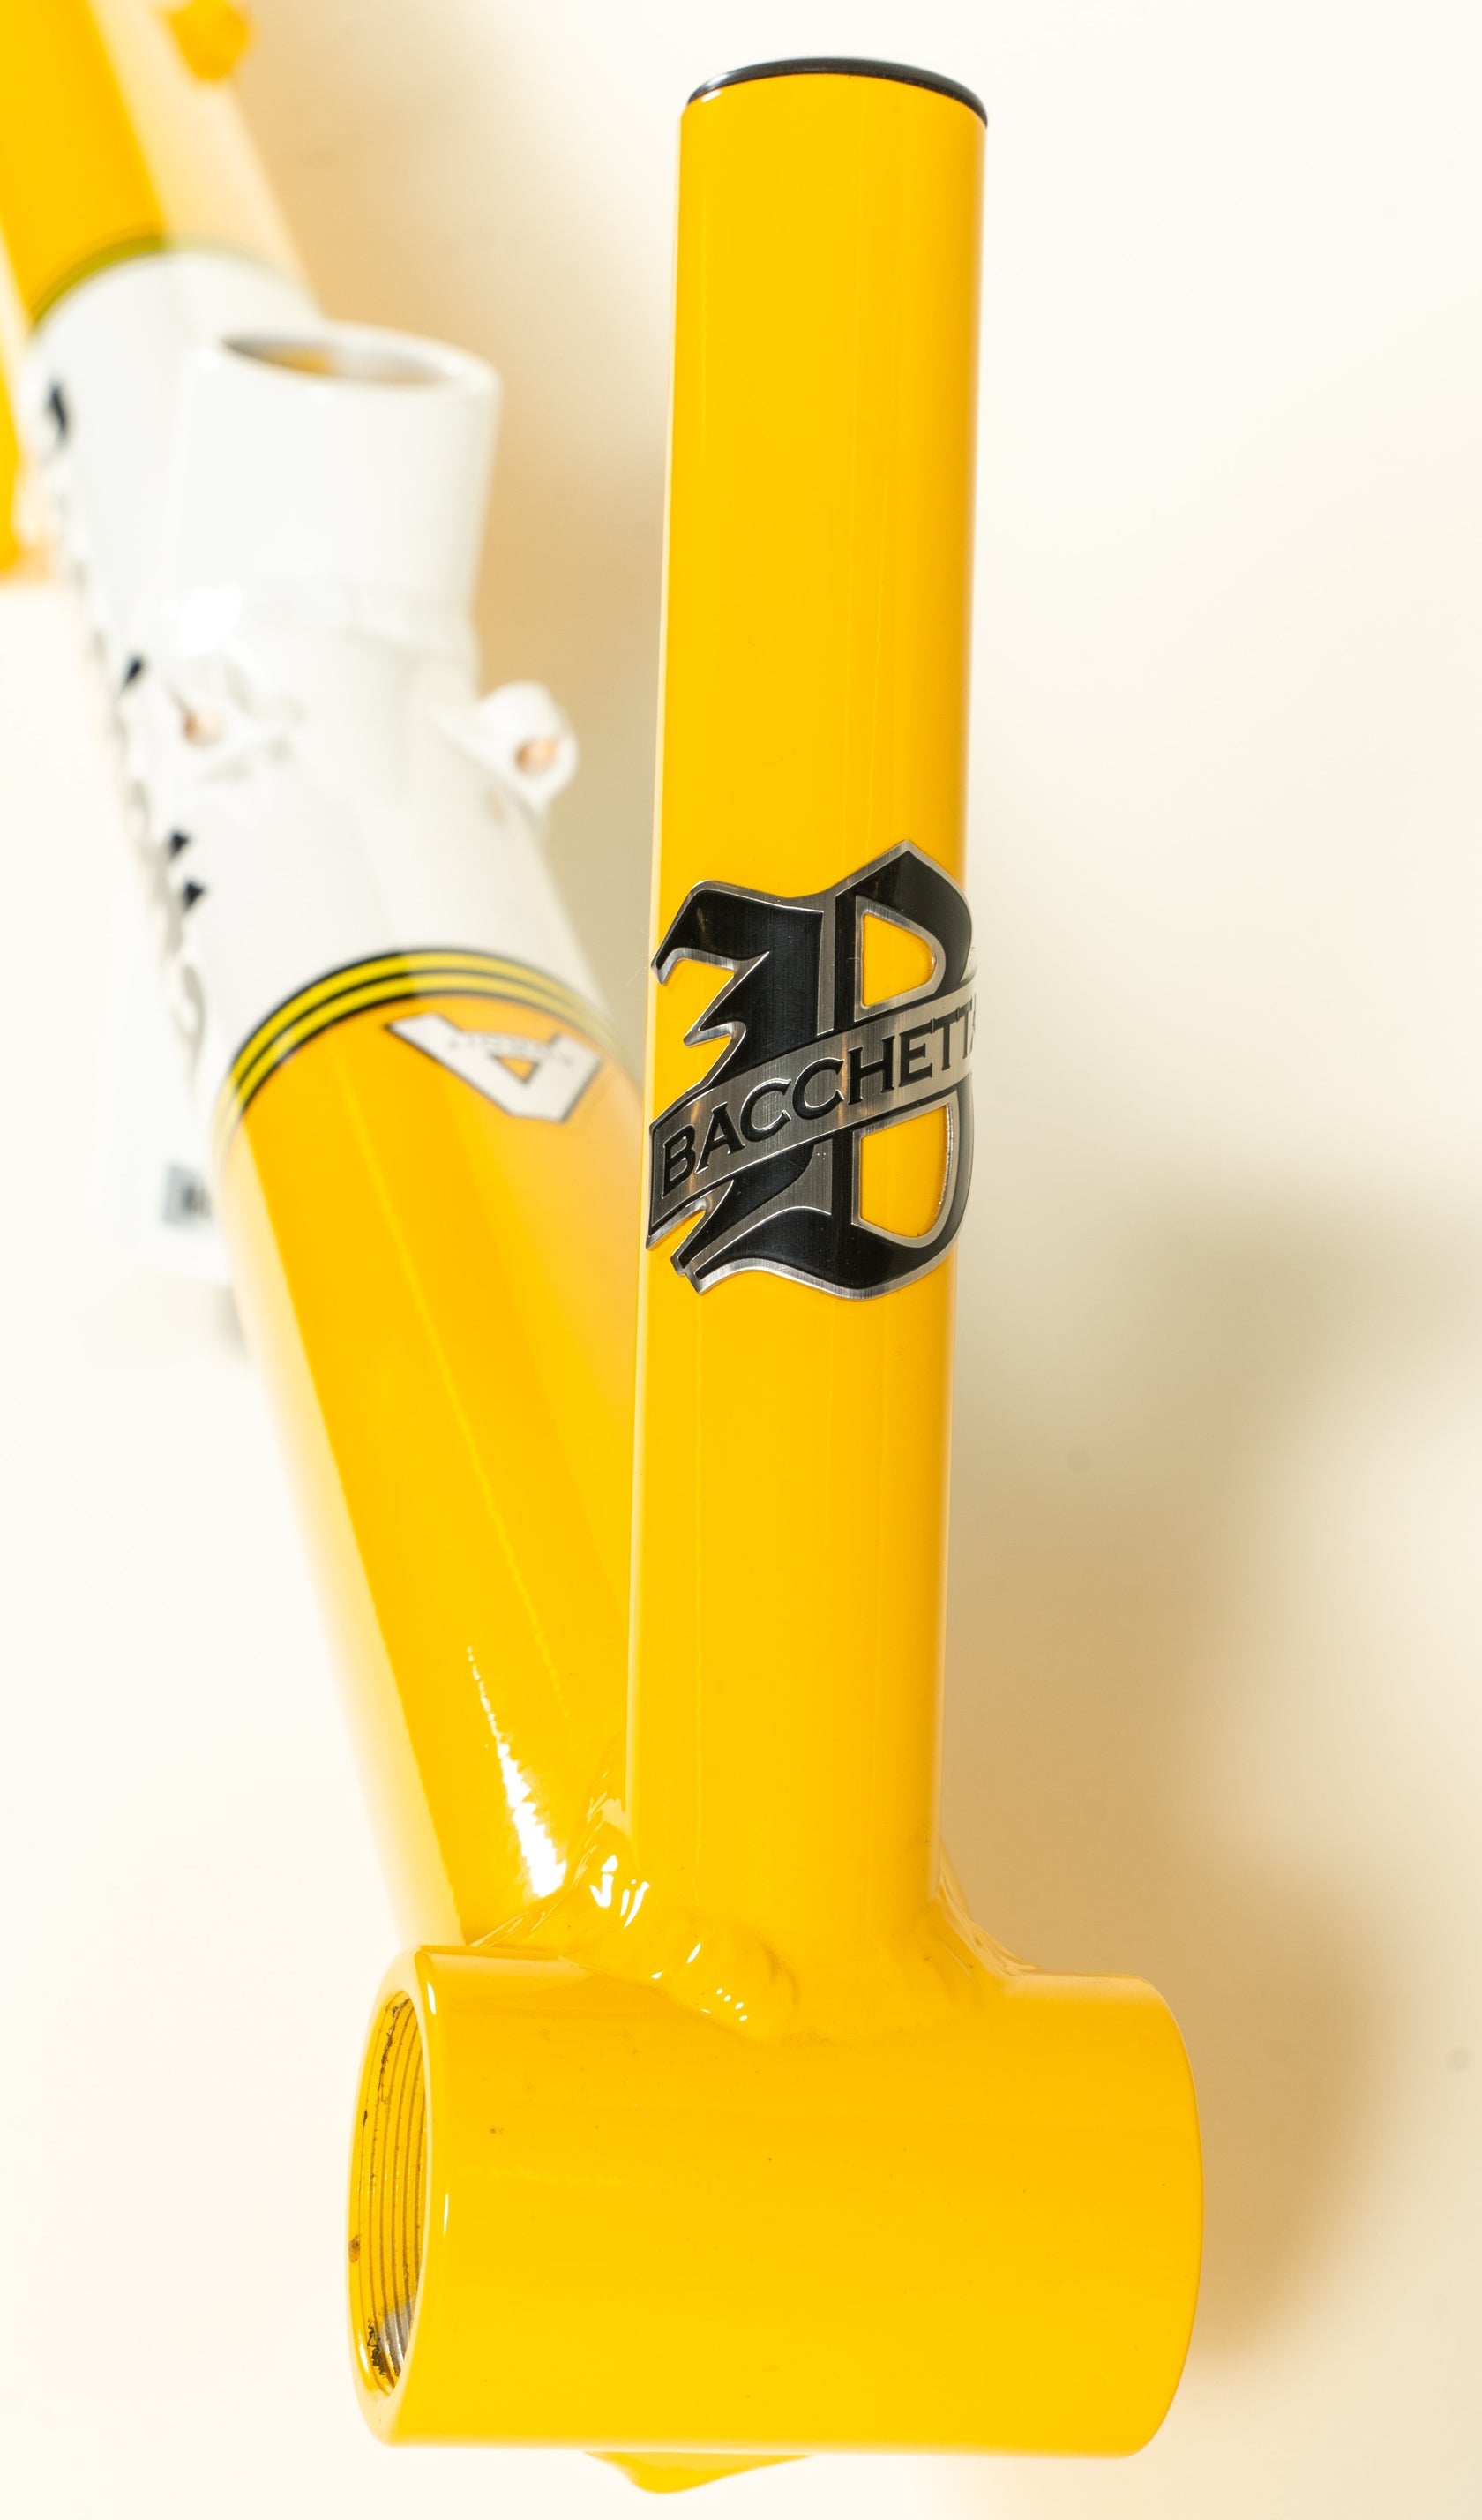 bacchetta logo on yellow frame